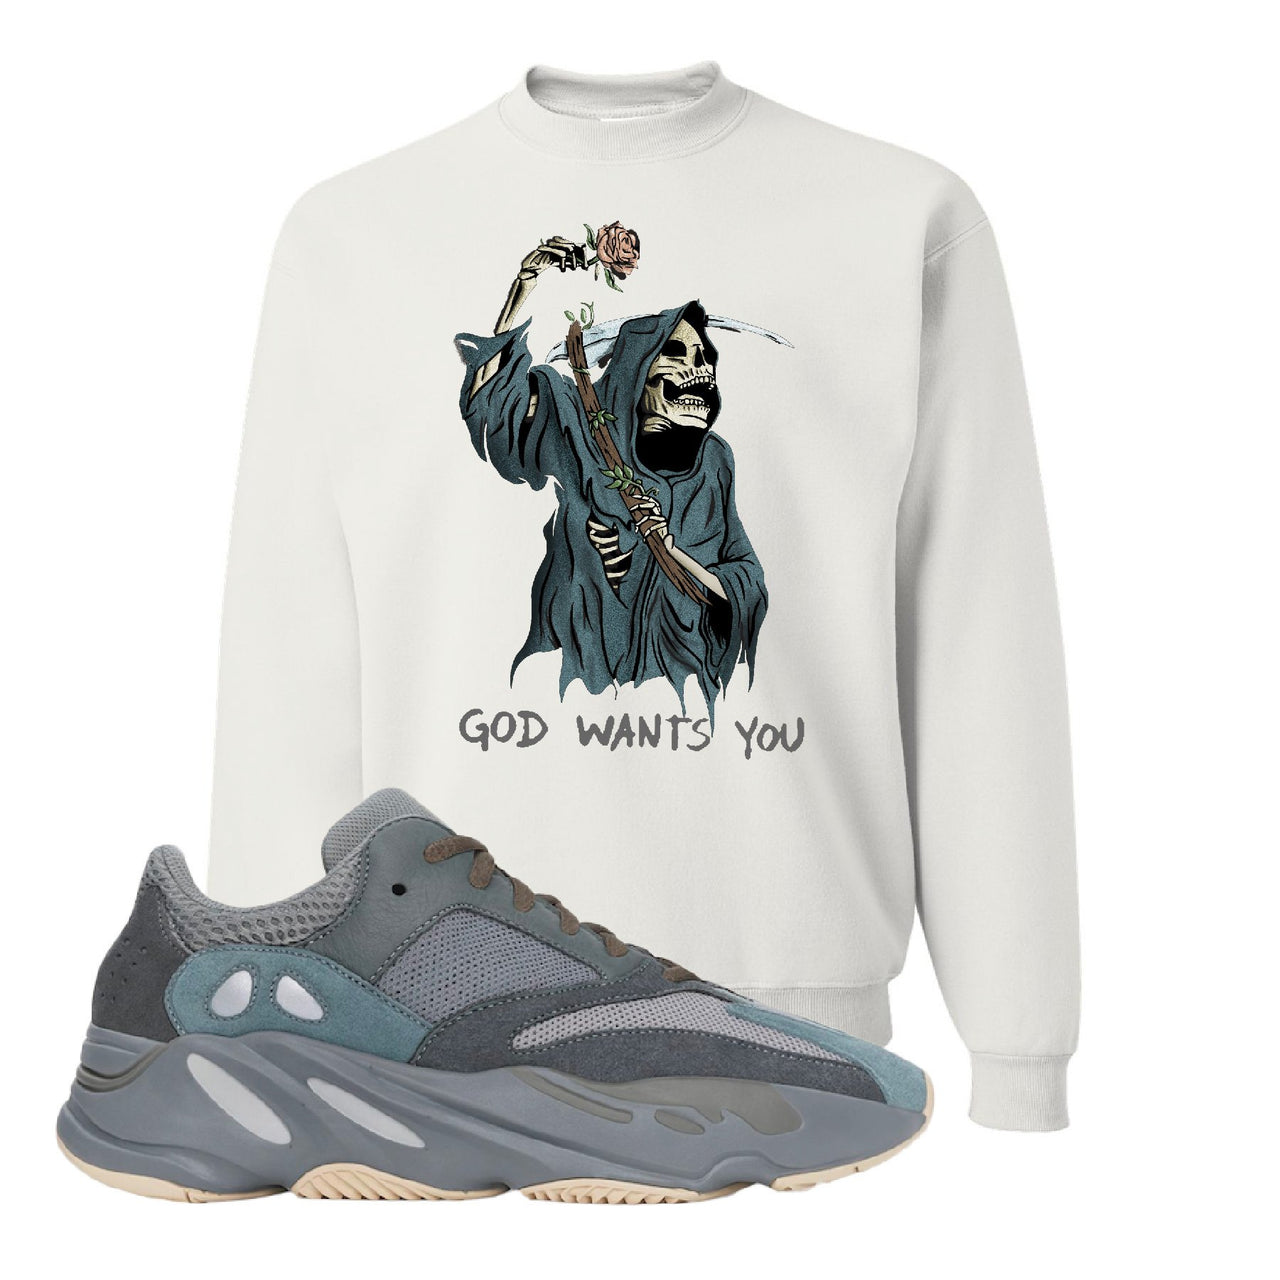 Yeezy Boost 700 Teal Blue God Wants You Reaper White Sneaker Hook Up Crewneck Sweatshirt